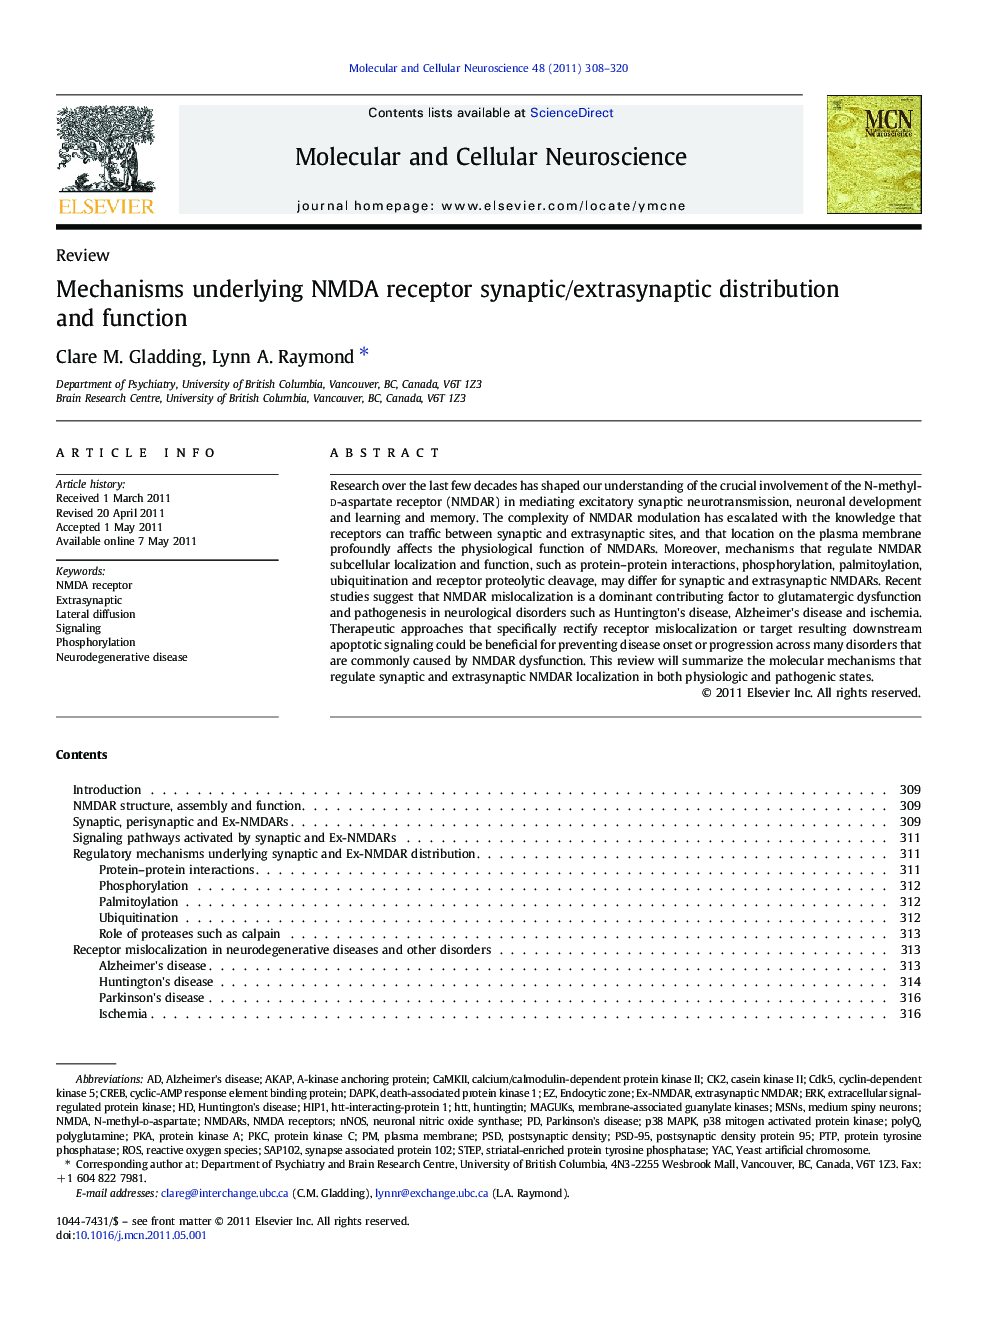 Mechanisms underlying NMDA receptor synaptic/extrasynaptic distribution and function